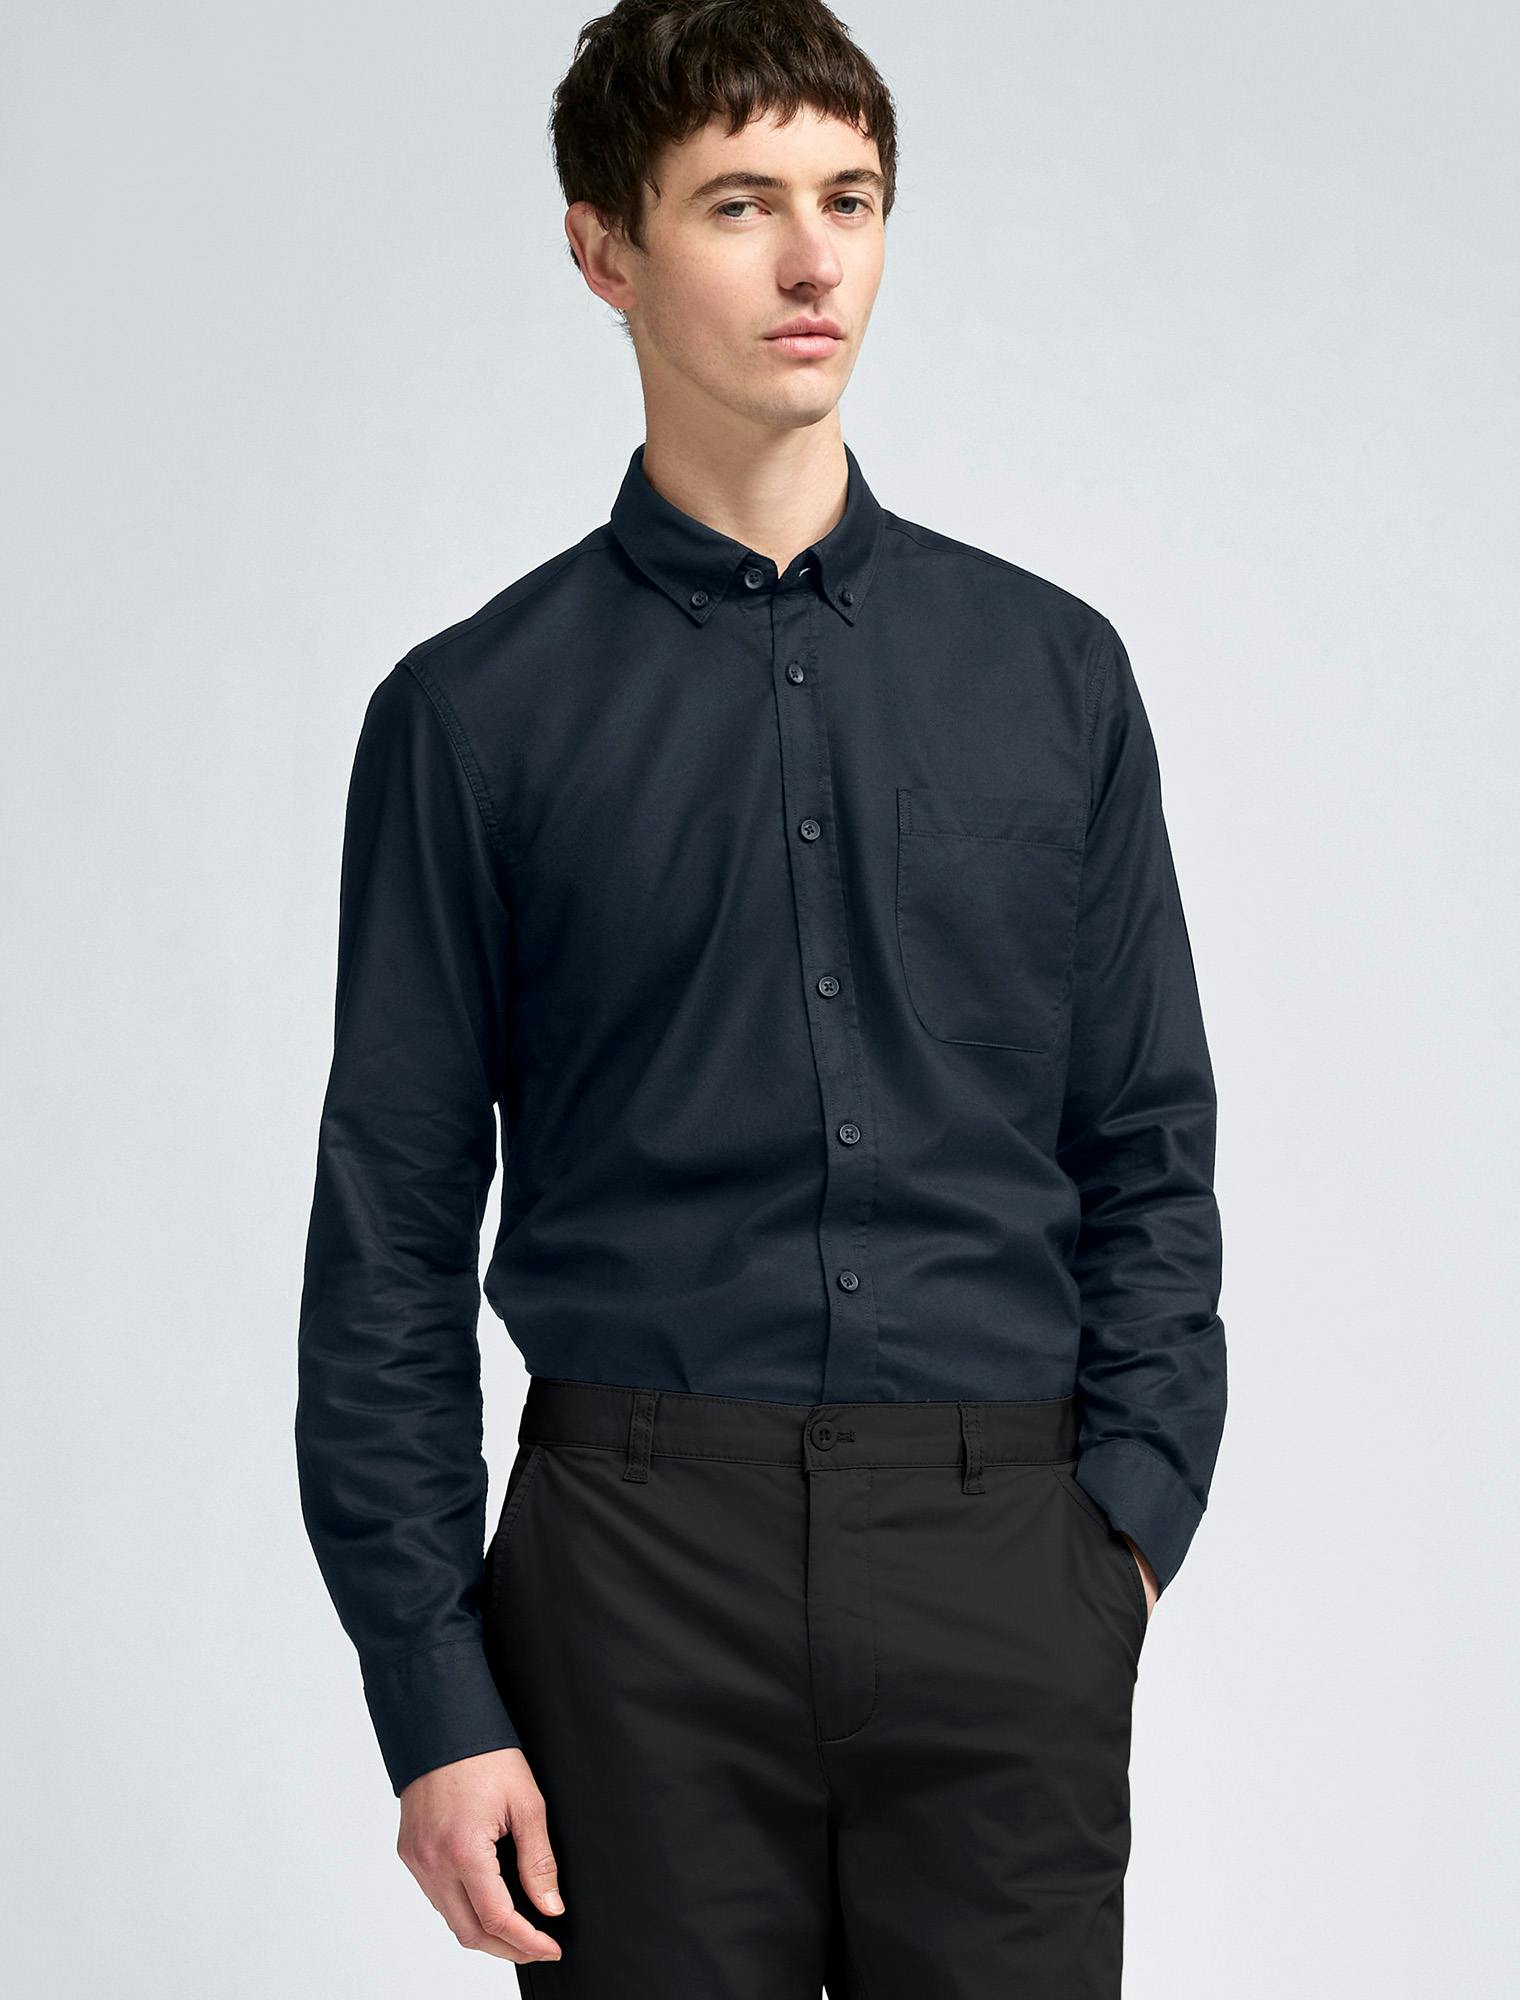 Men's Smith Oxford Long Sleeve Shirt - Midnight Navy Blue